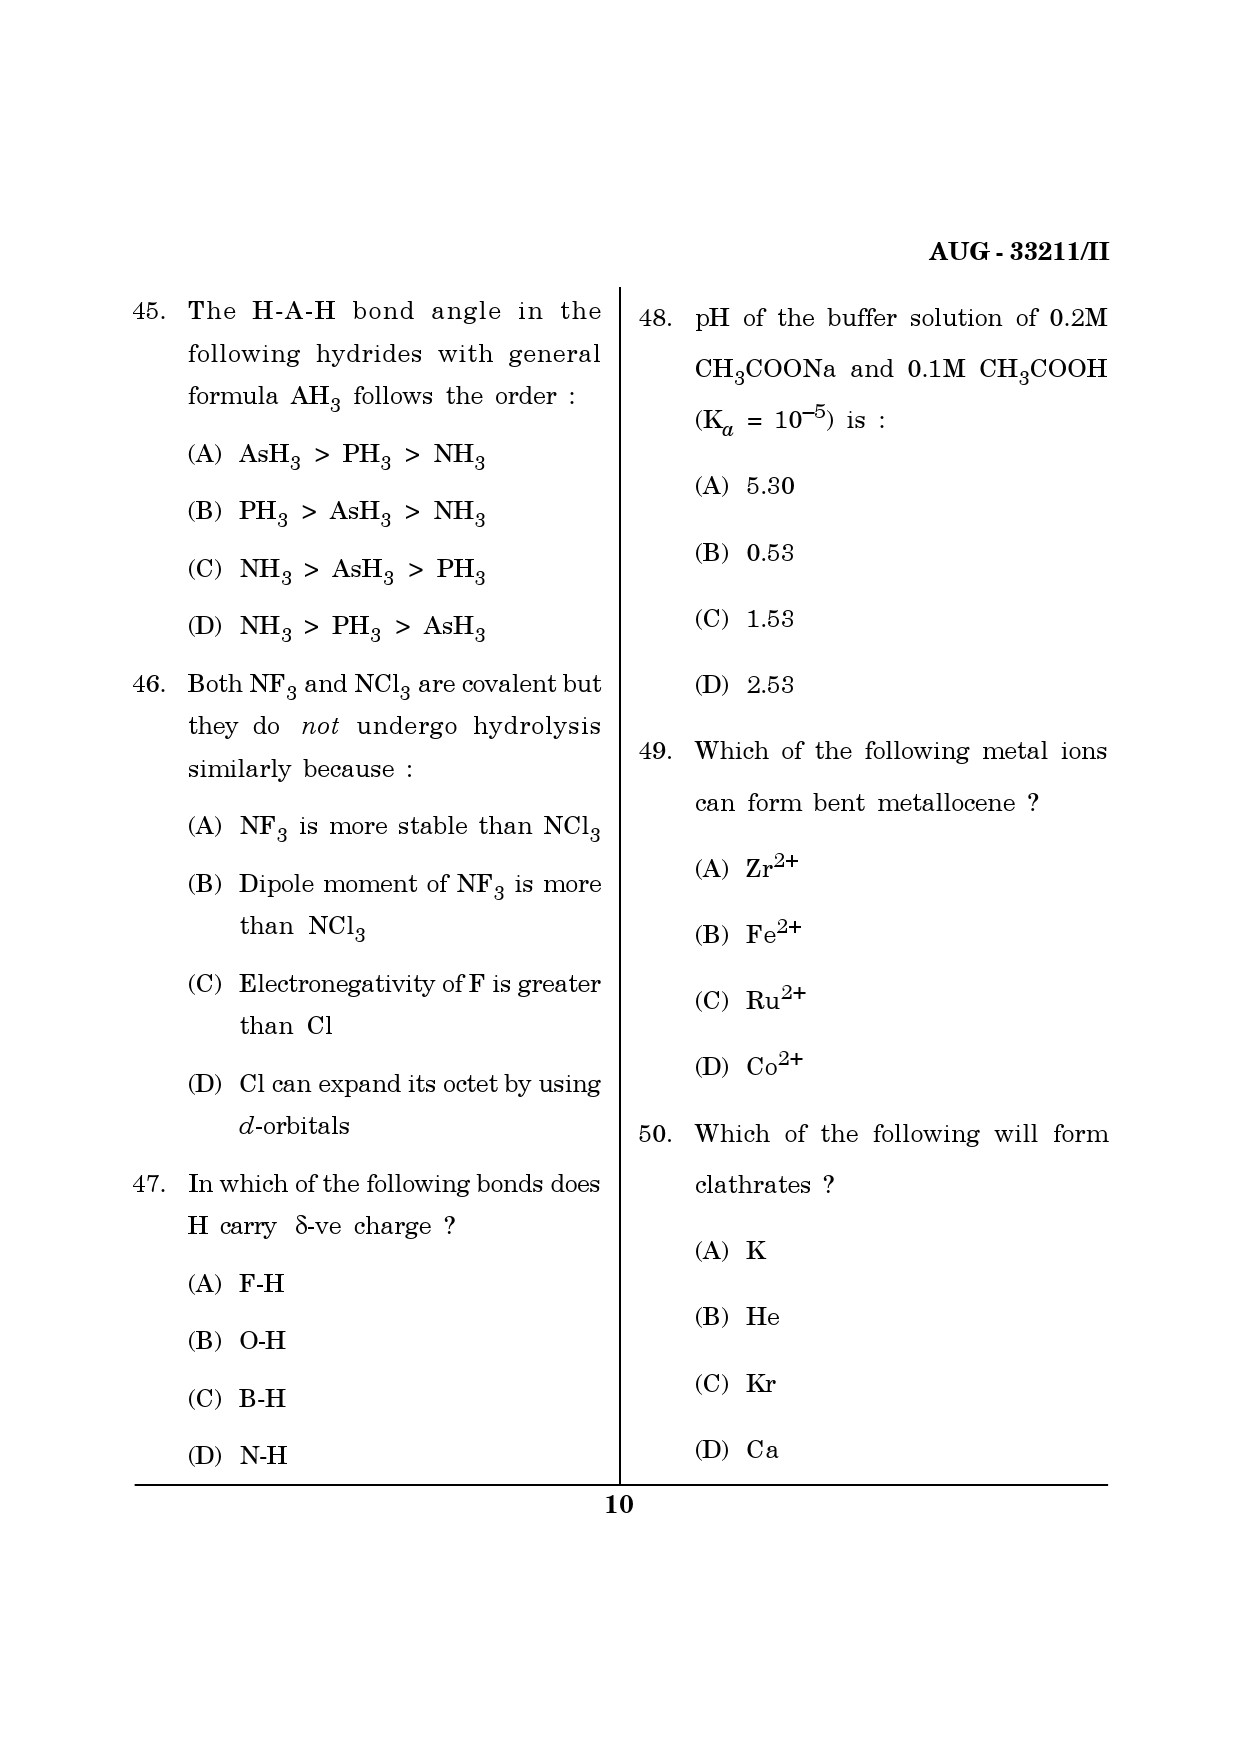 Maharashtra SET Chemical Sciences Question Paper II August 2011 10